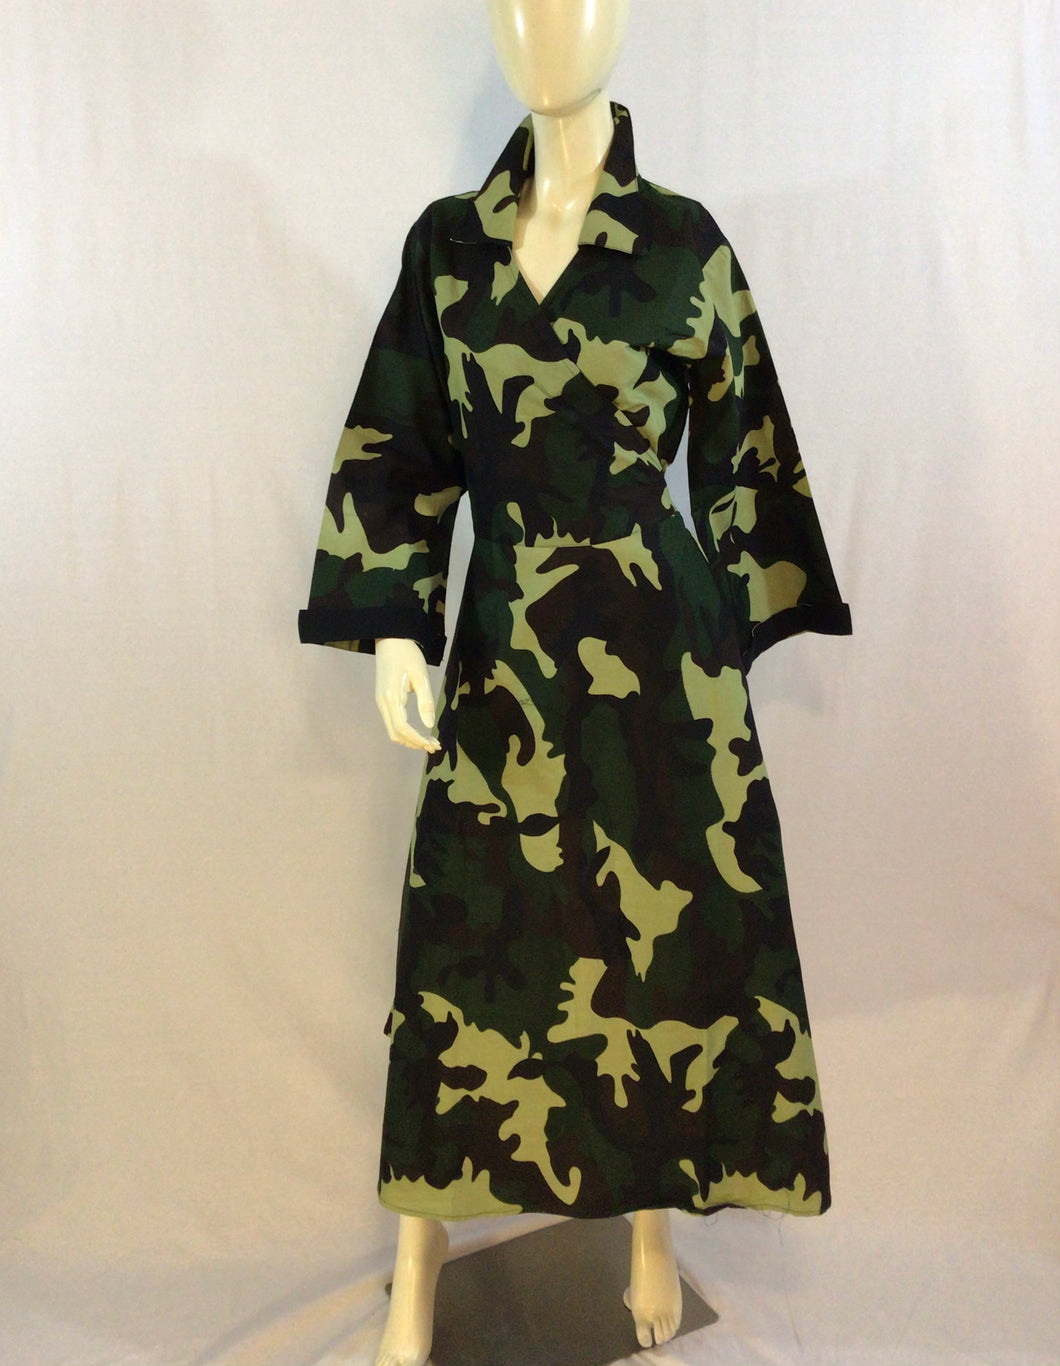 Camo Military Style  Maxi Dress with Bandana Scarf